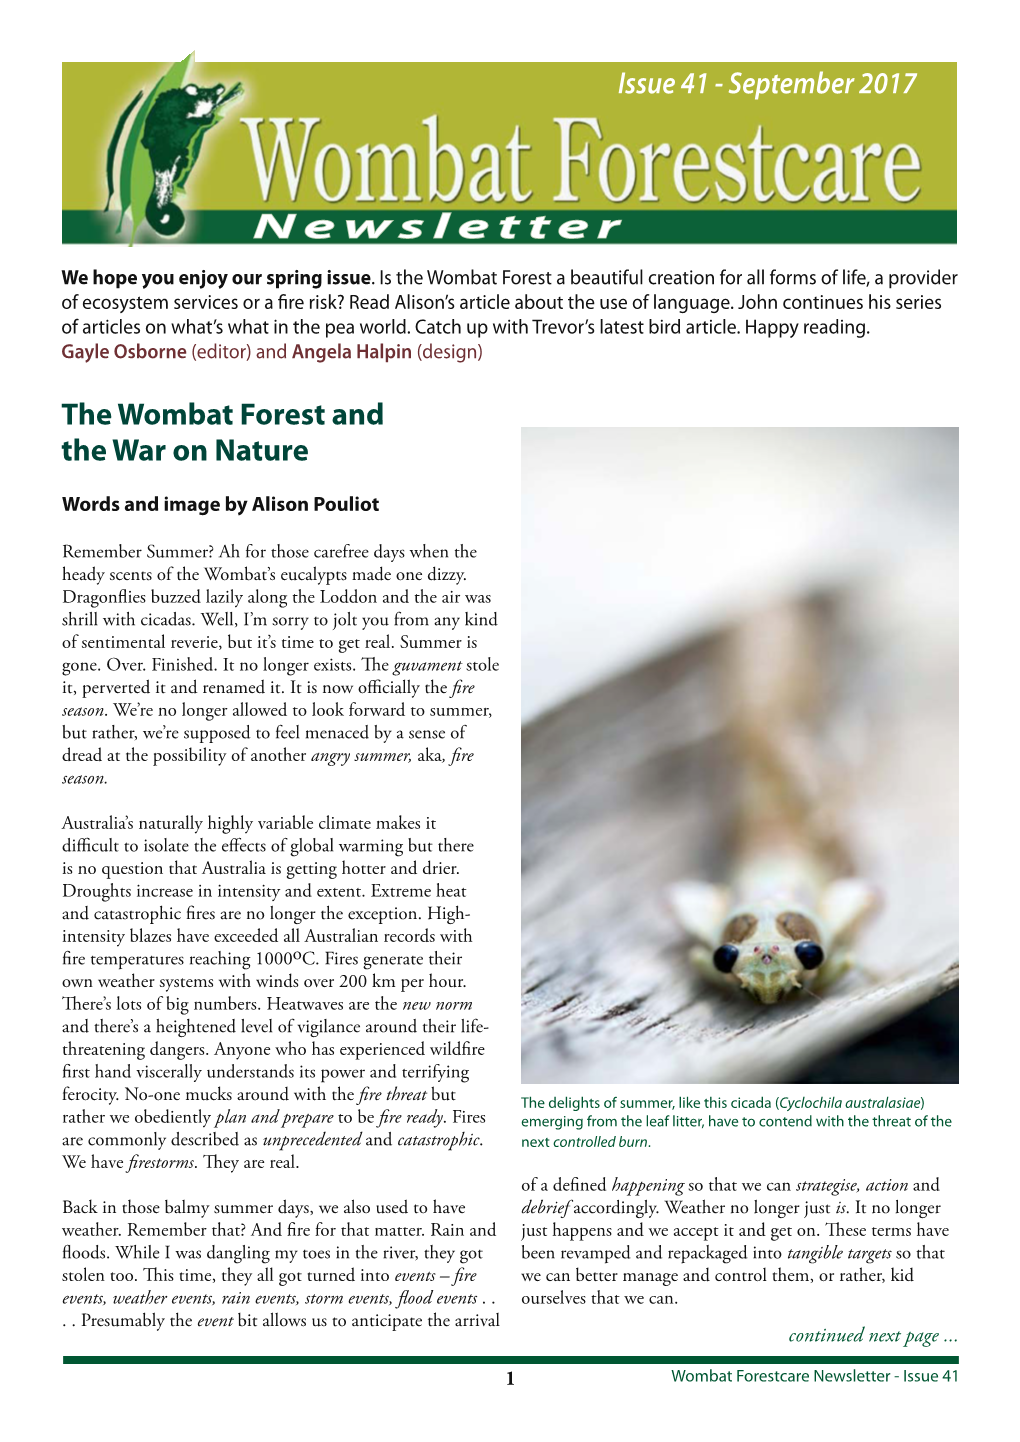 Forestcare Newsletter